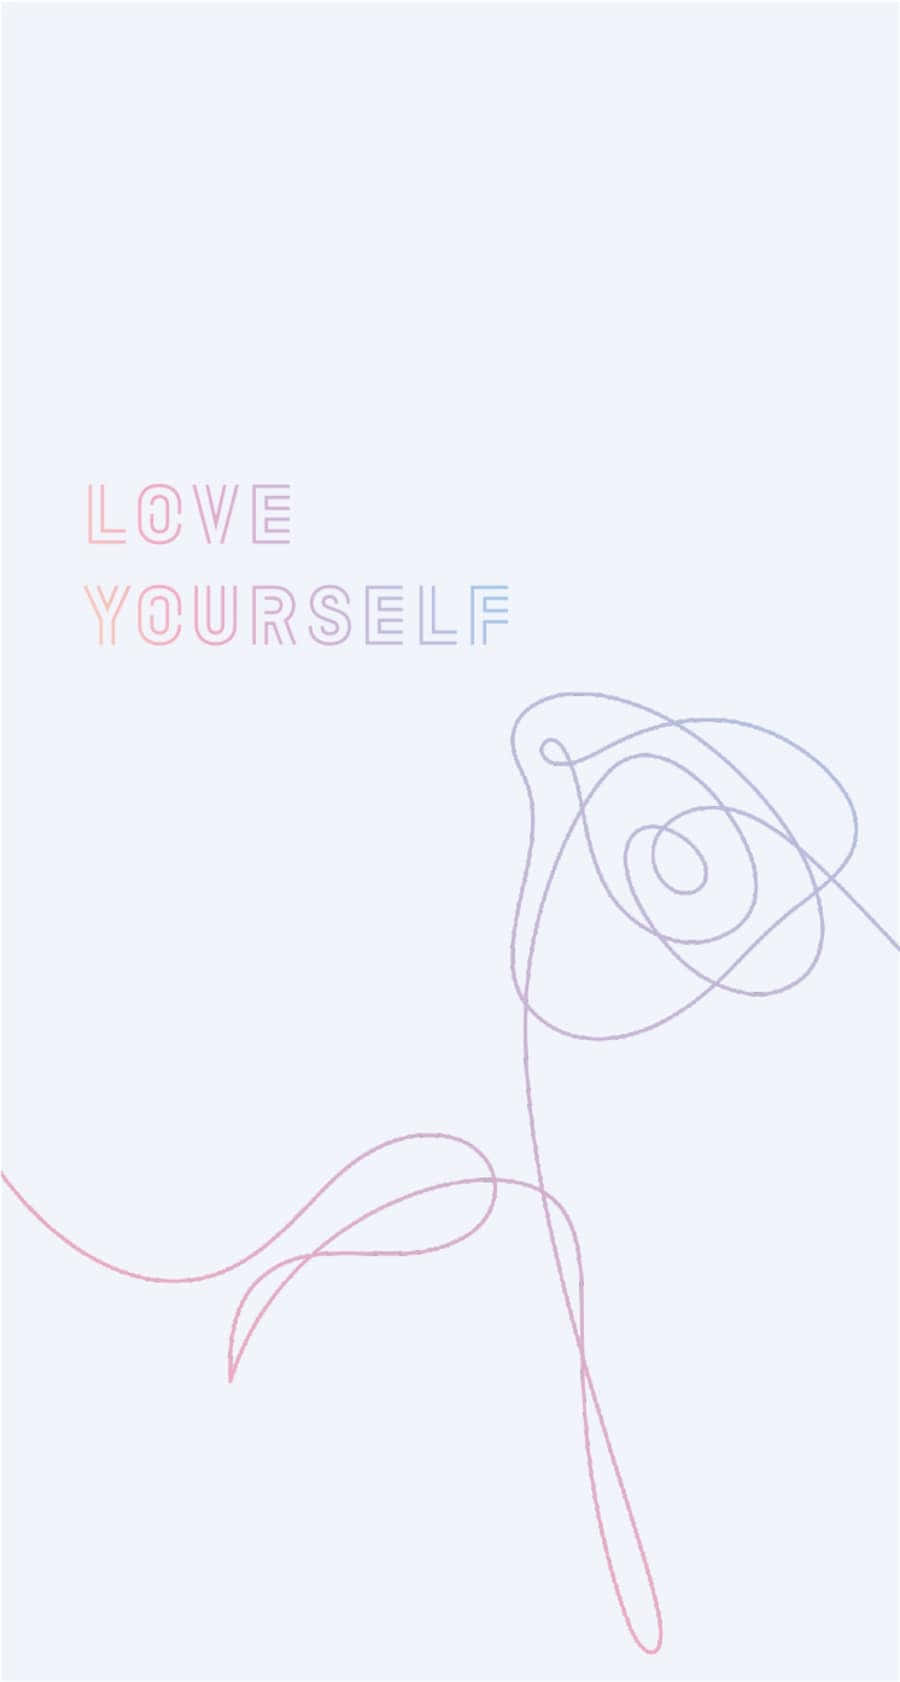 Bts Love Yourself - Inspiring Self-love Through Music Wallpaper